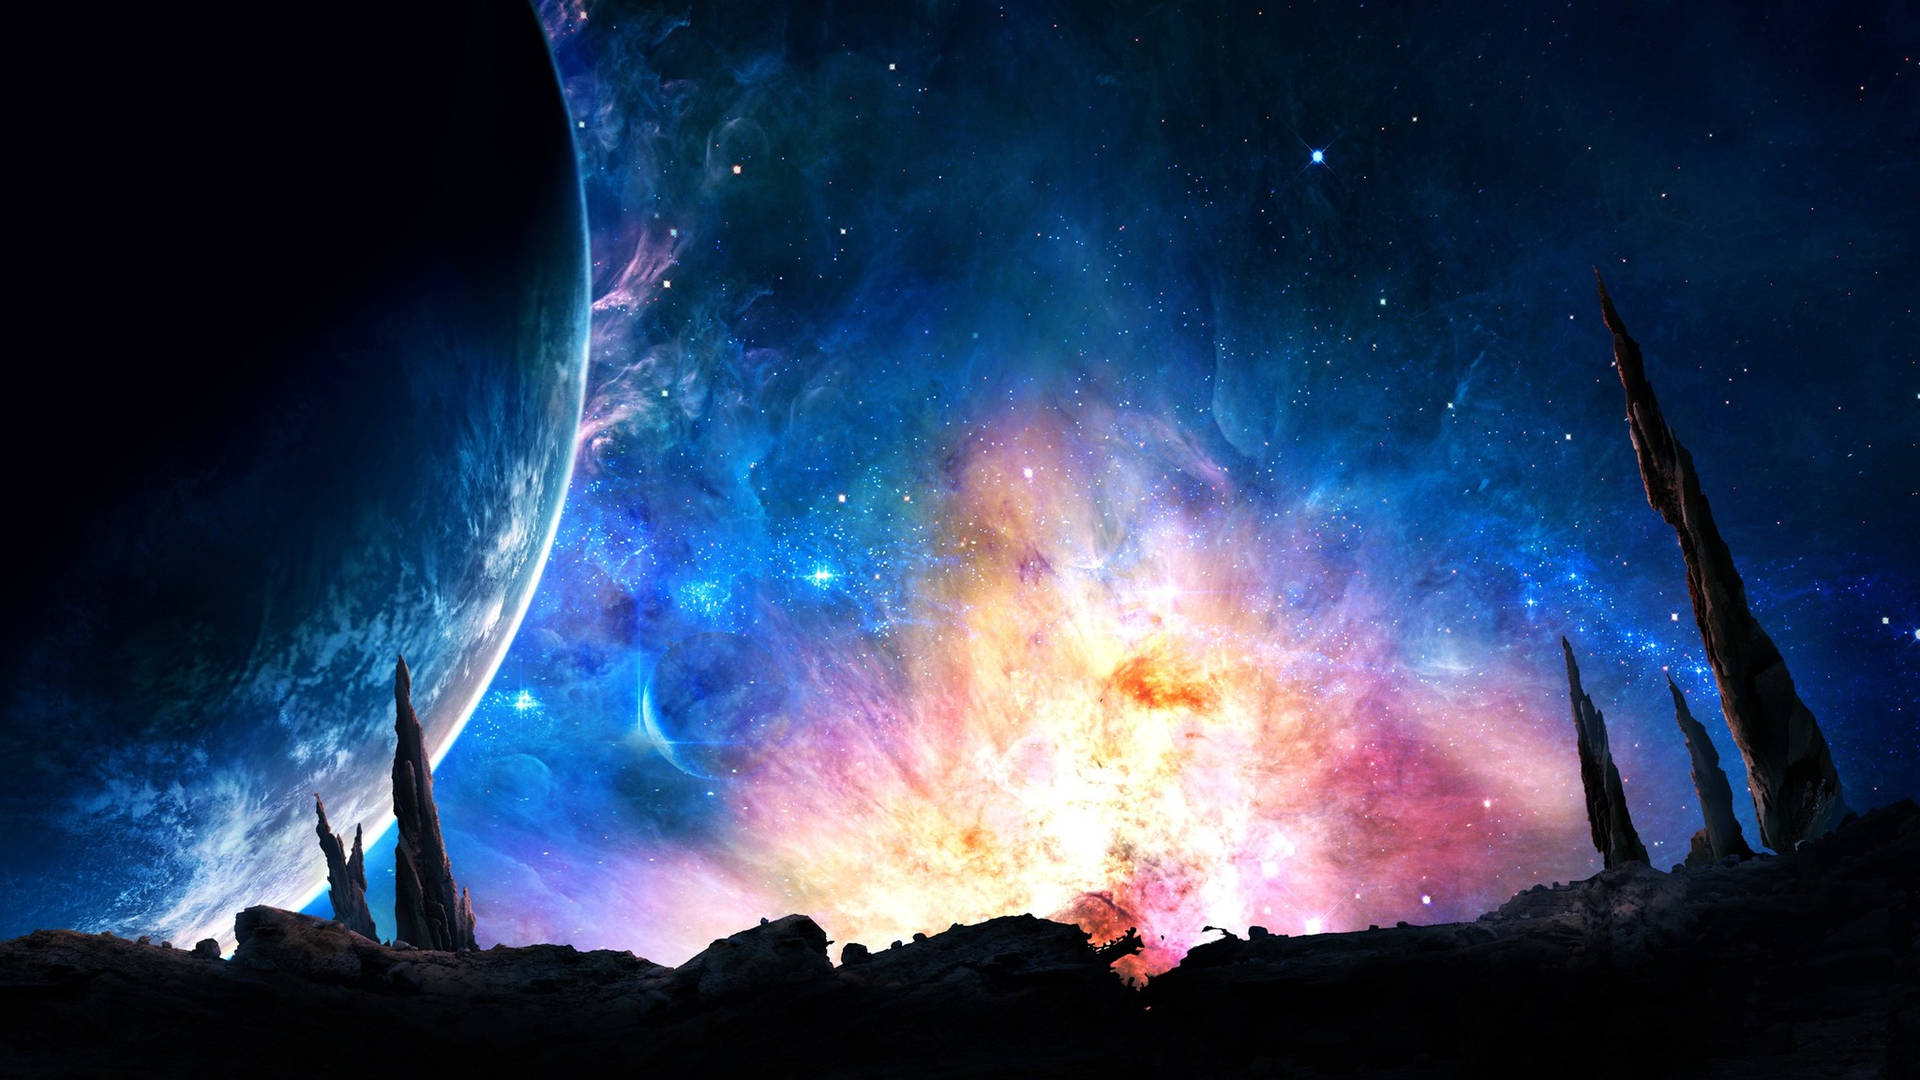 Planet Rocks In Nebula Sky Picture